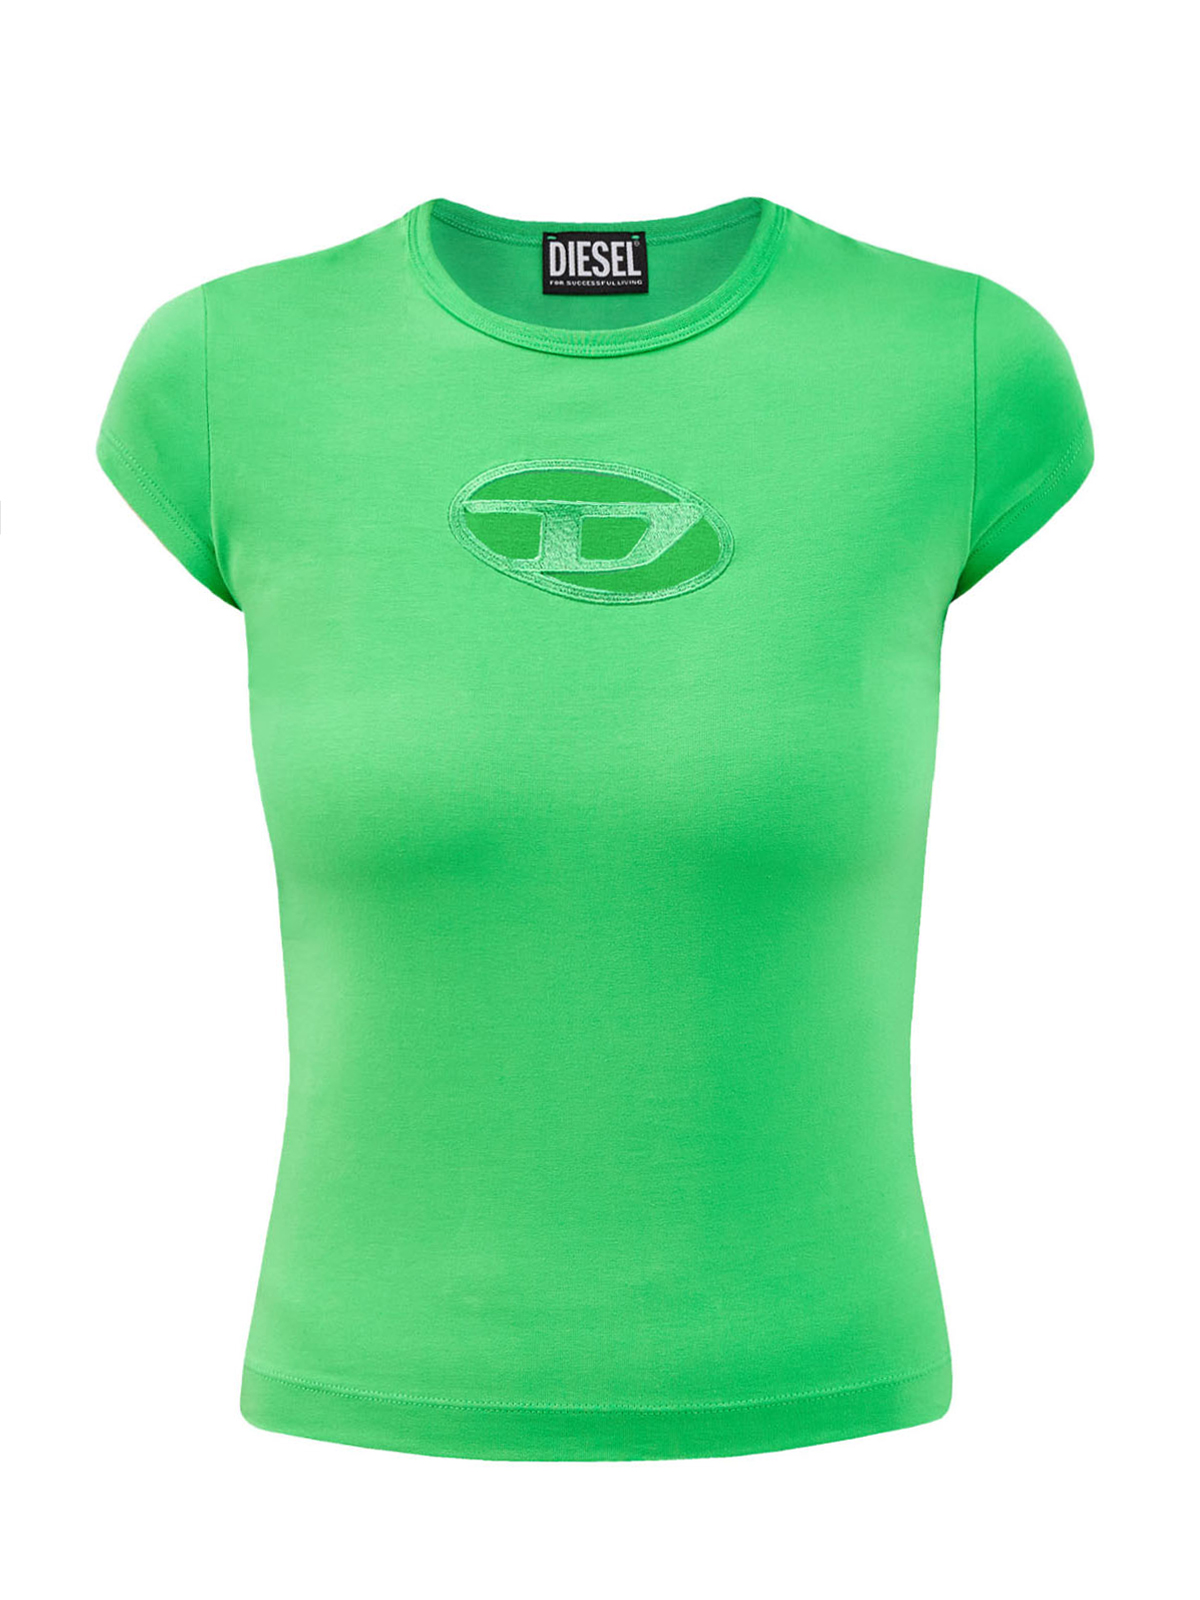 Хлопковая футболка T-Angie с вышитым лазерным логотипом DIESEL, цвет зеленый, размер M;S - фото 1